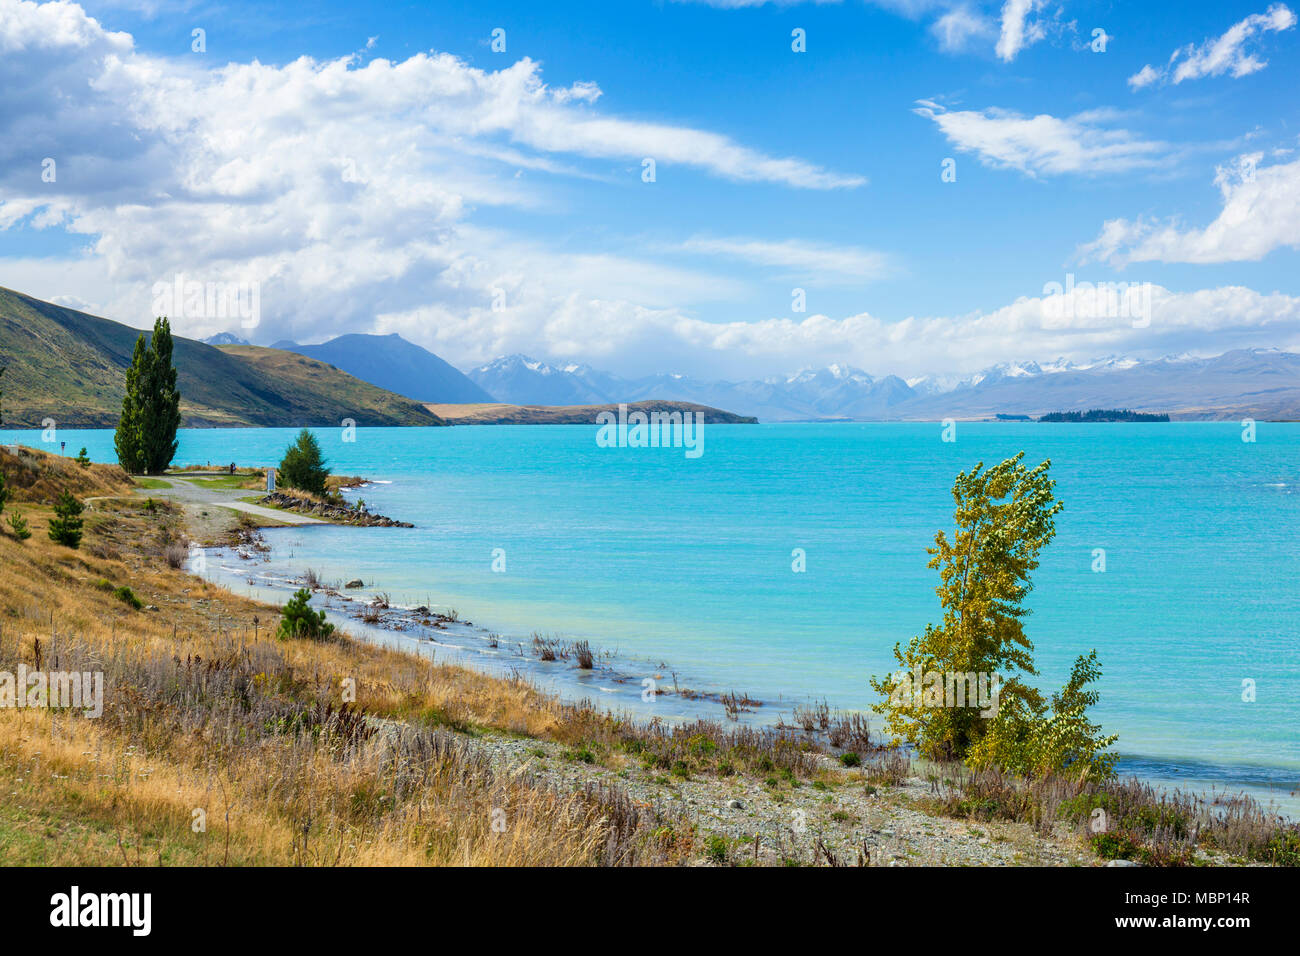 Neuseeland Südinsel Neuseeland Küste der Gletschersee Tekapo mackenzie Bezirk Region Canterbury Neuseeland nz Stockfoto